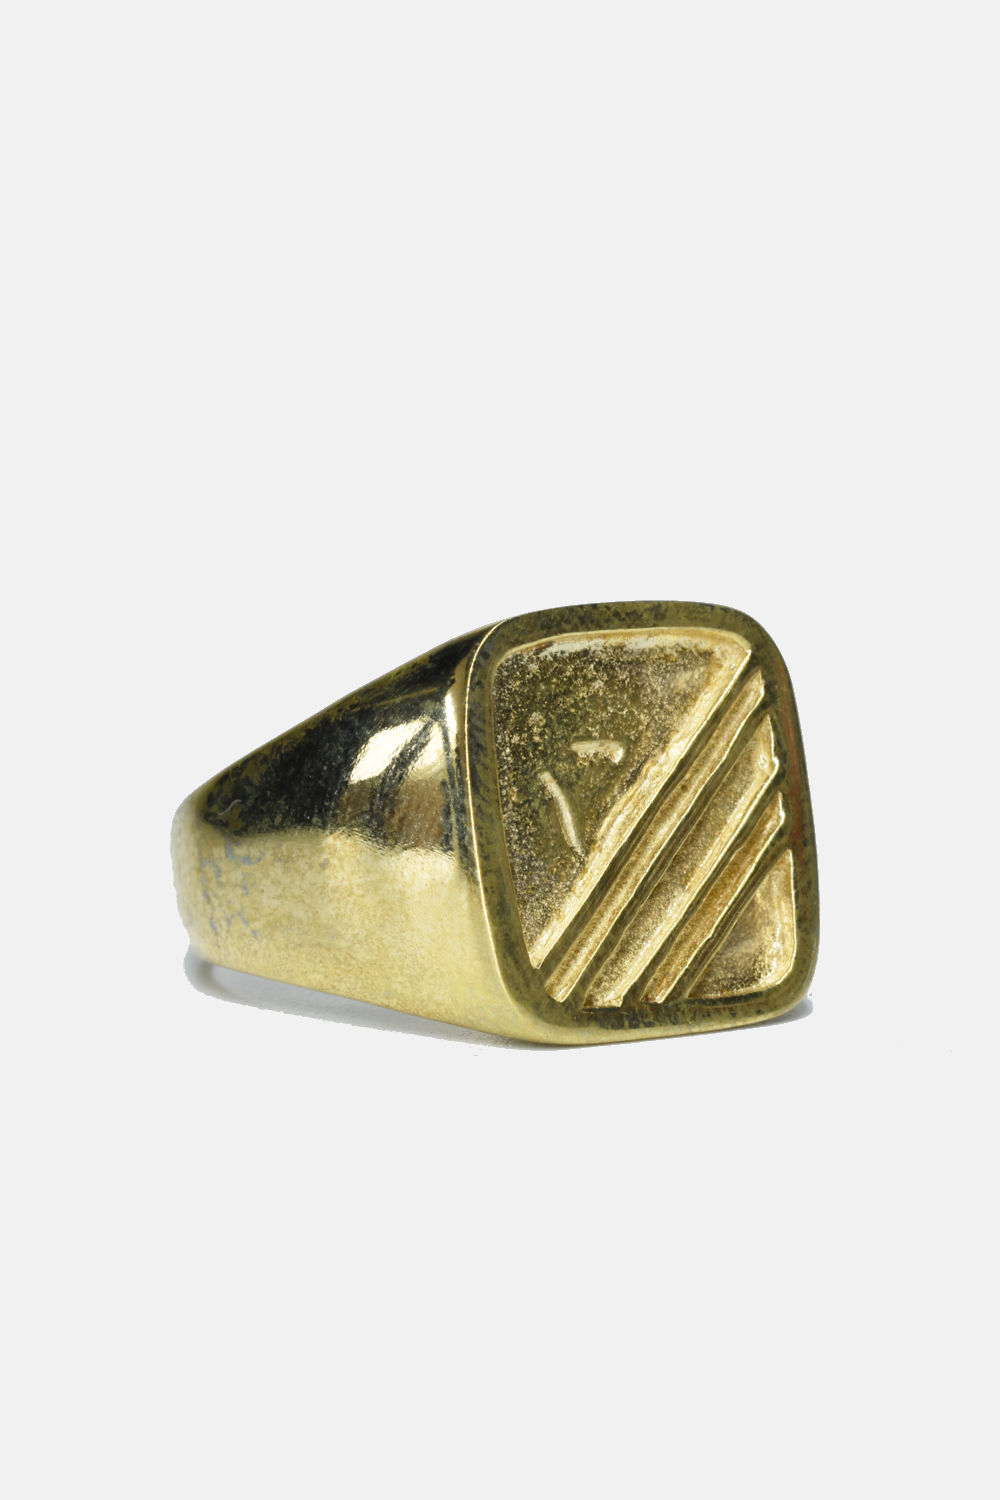 Brass Square Striped Ring: 10